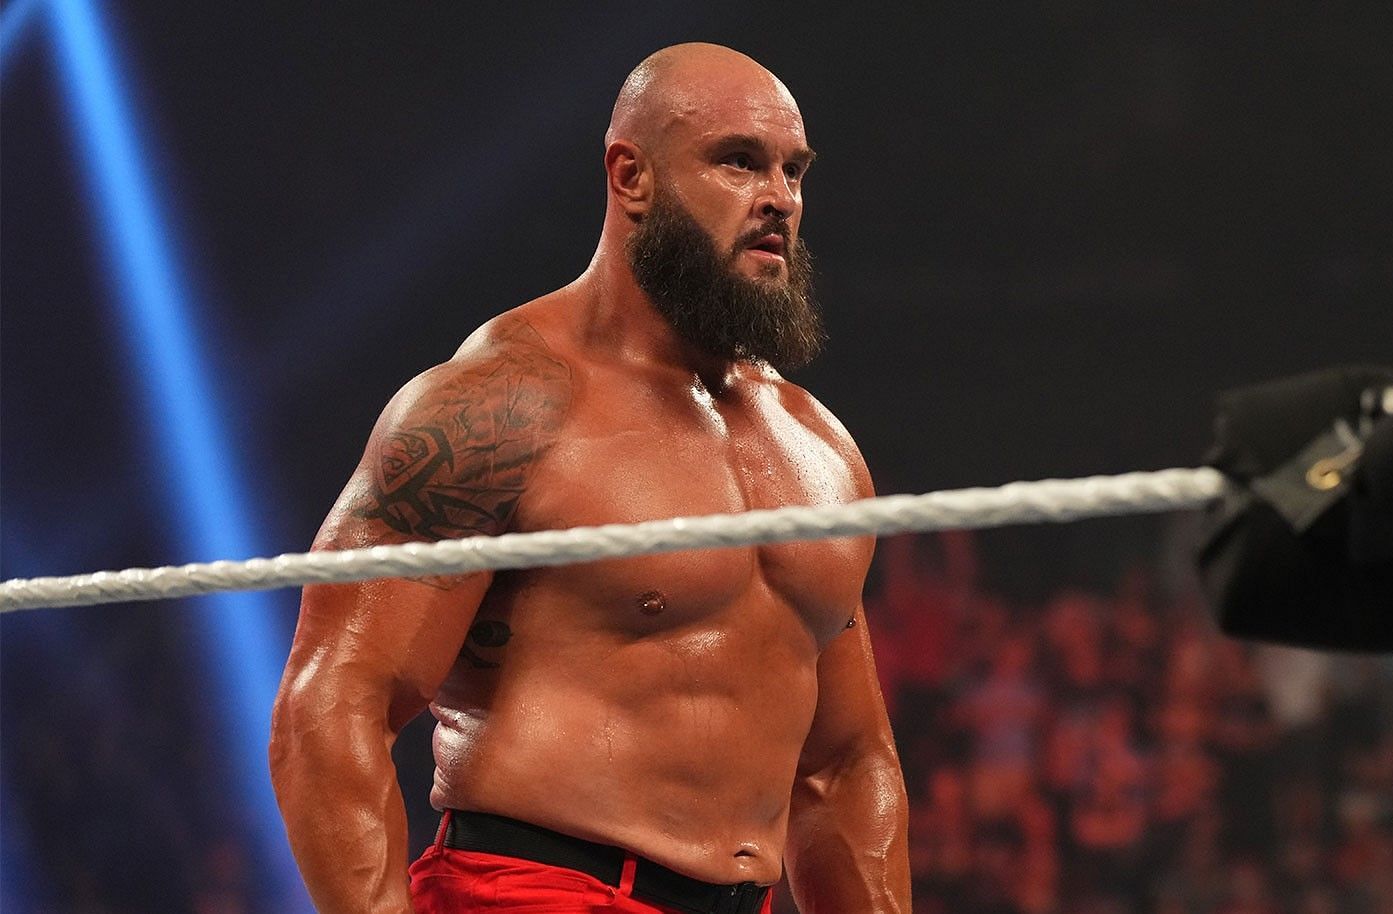 Braun Strowman returned to WWE in 2022